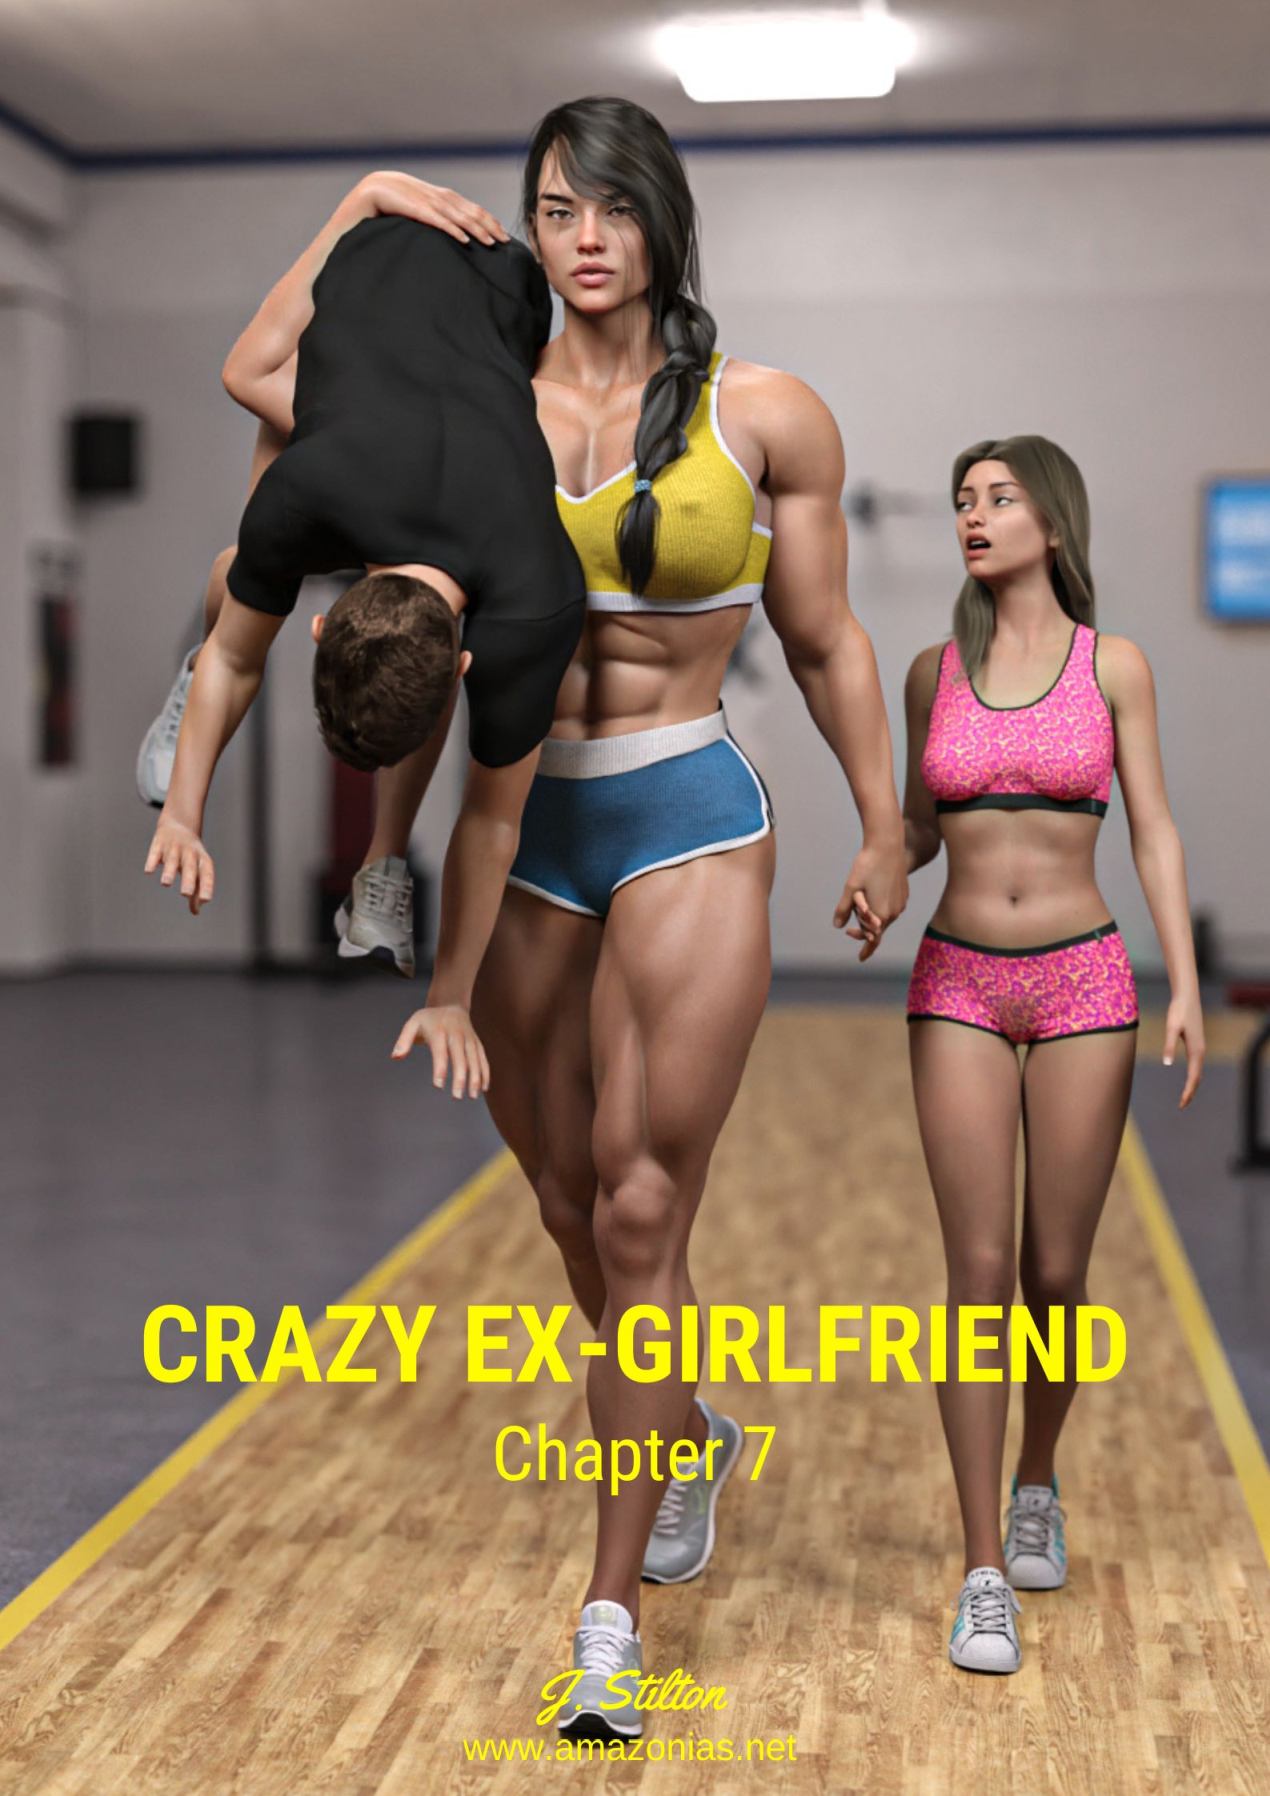 huge female bodybuilder carrying man